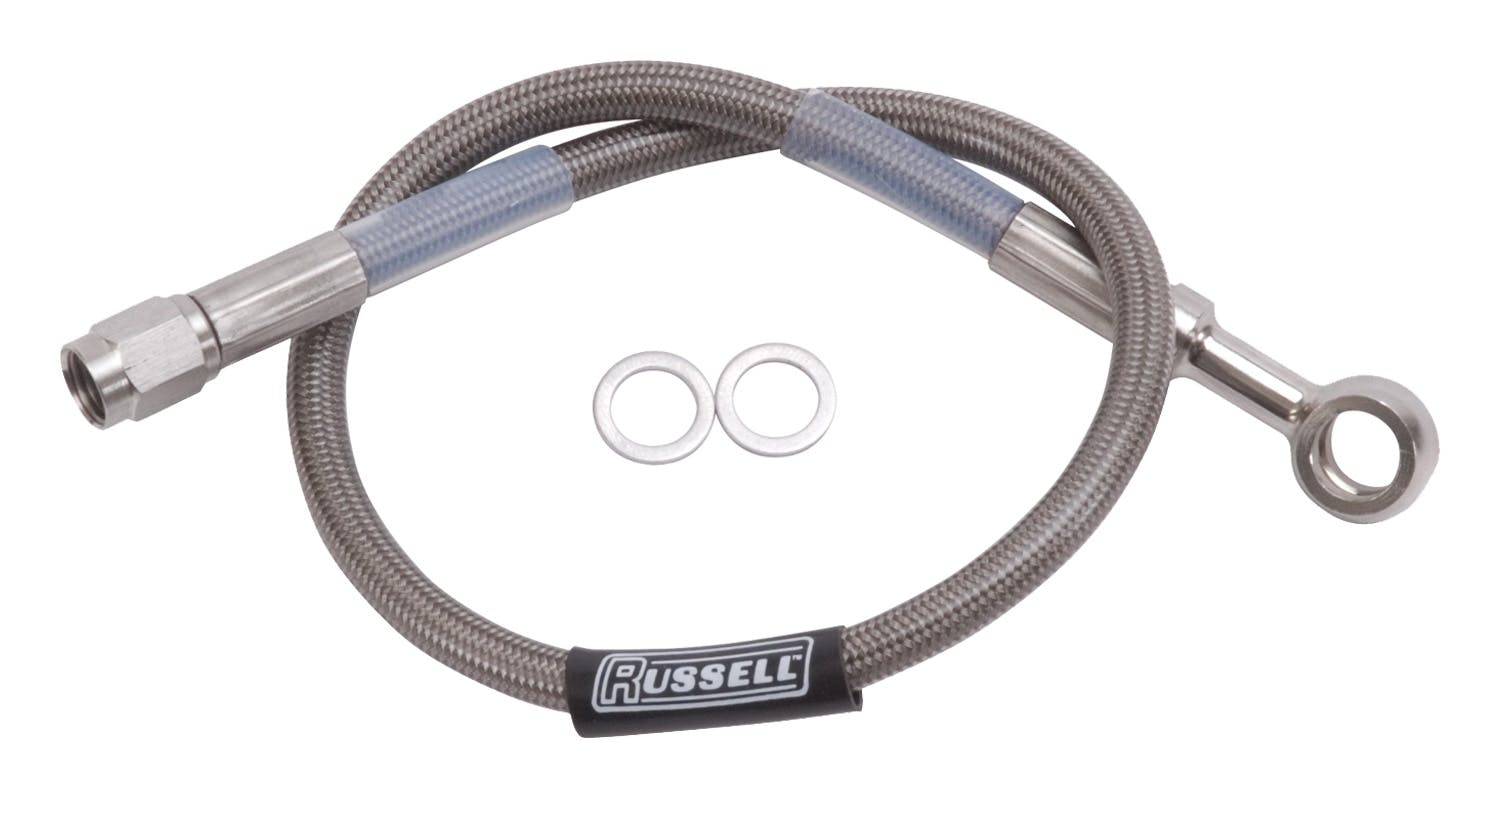 Russell 657052 Brake Line Assembly  21in Straight # 3 X 10mm Banjo   Endura / Street Legal